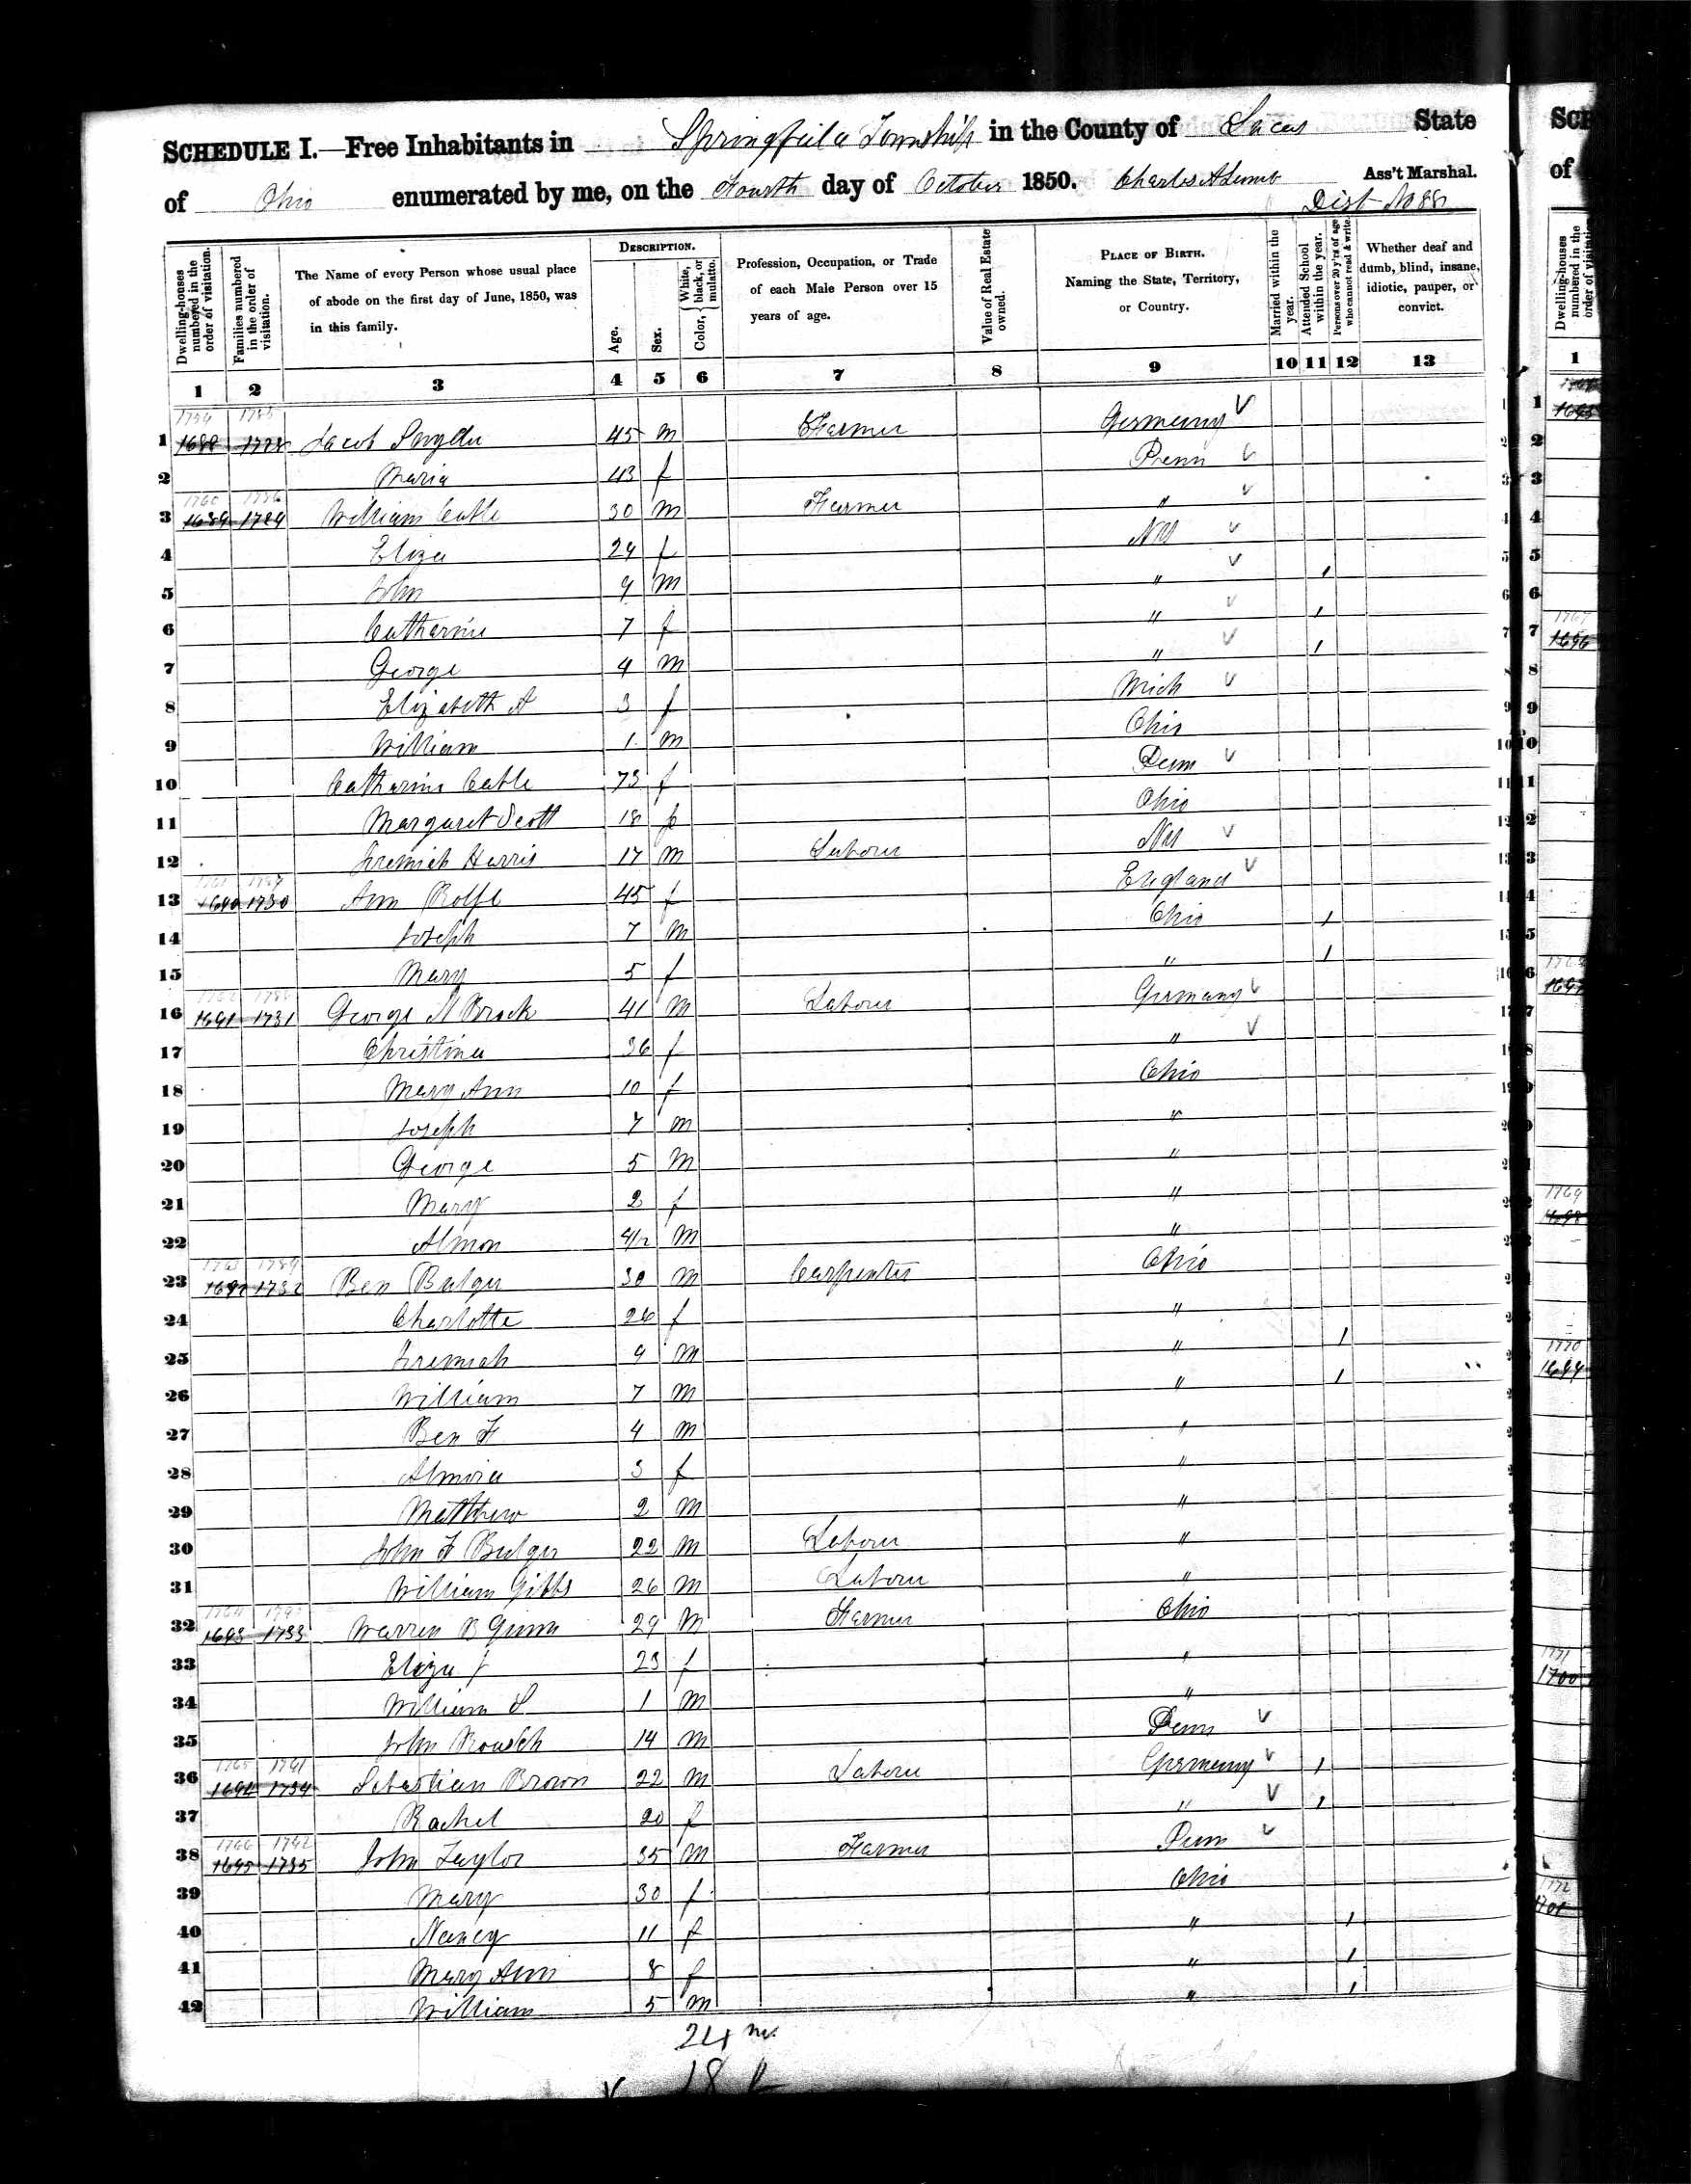 John Roush, 1850 Lucas County, Ohio, census. In the home of the [Gwinn? Quinn? Gunn?] family.